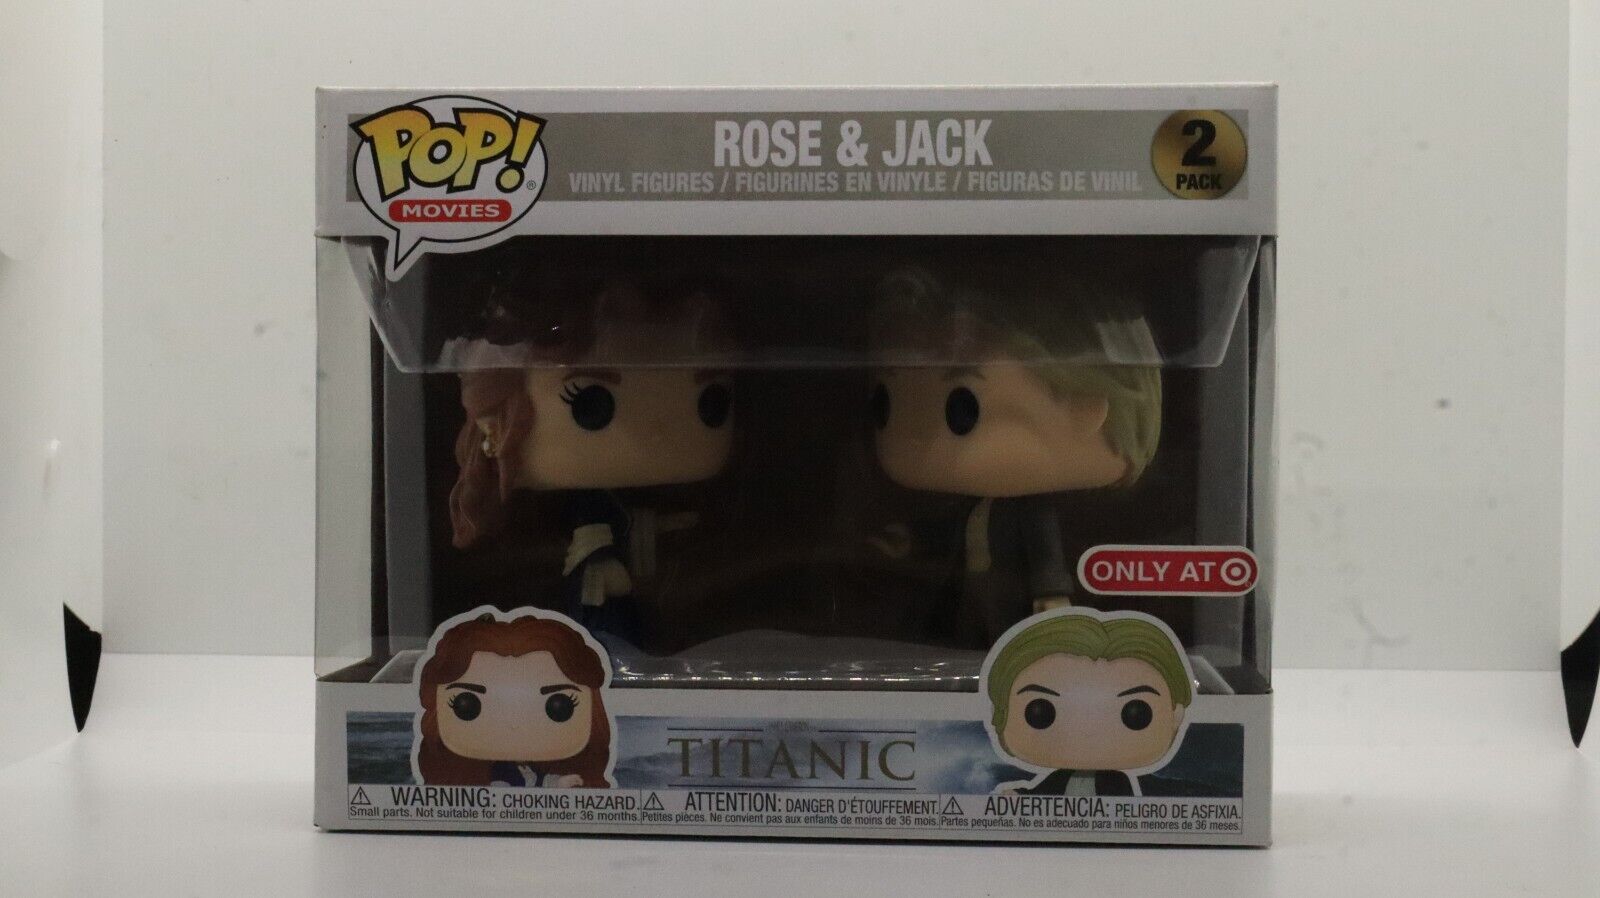 Rose & Jack - Titanic - Funko Pop - Movies - 2 Pack - Unopened 